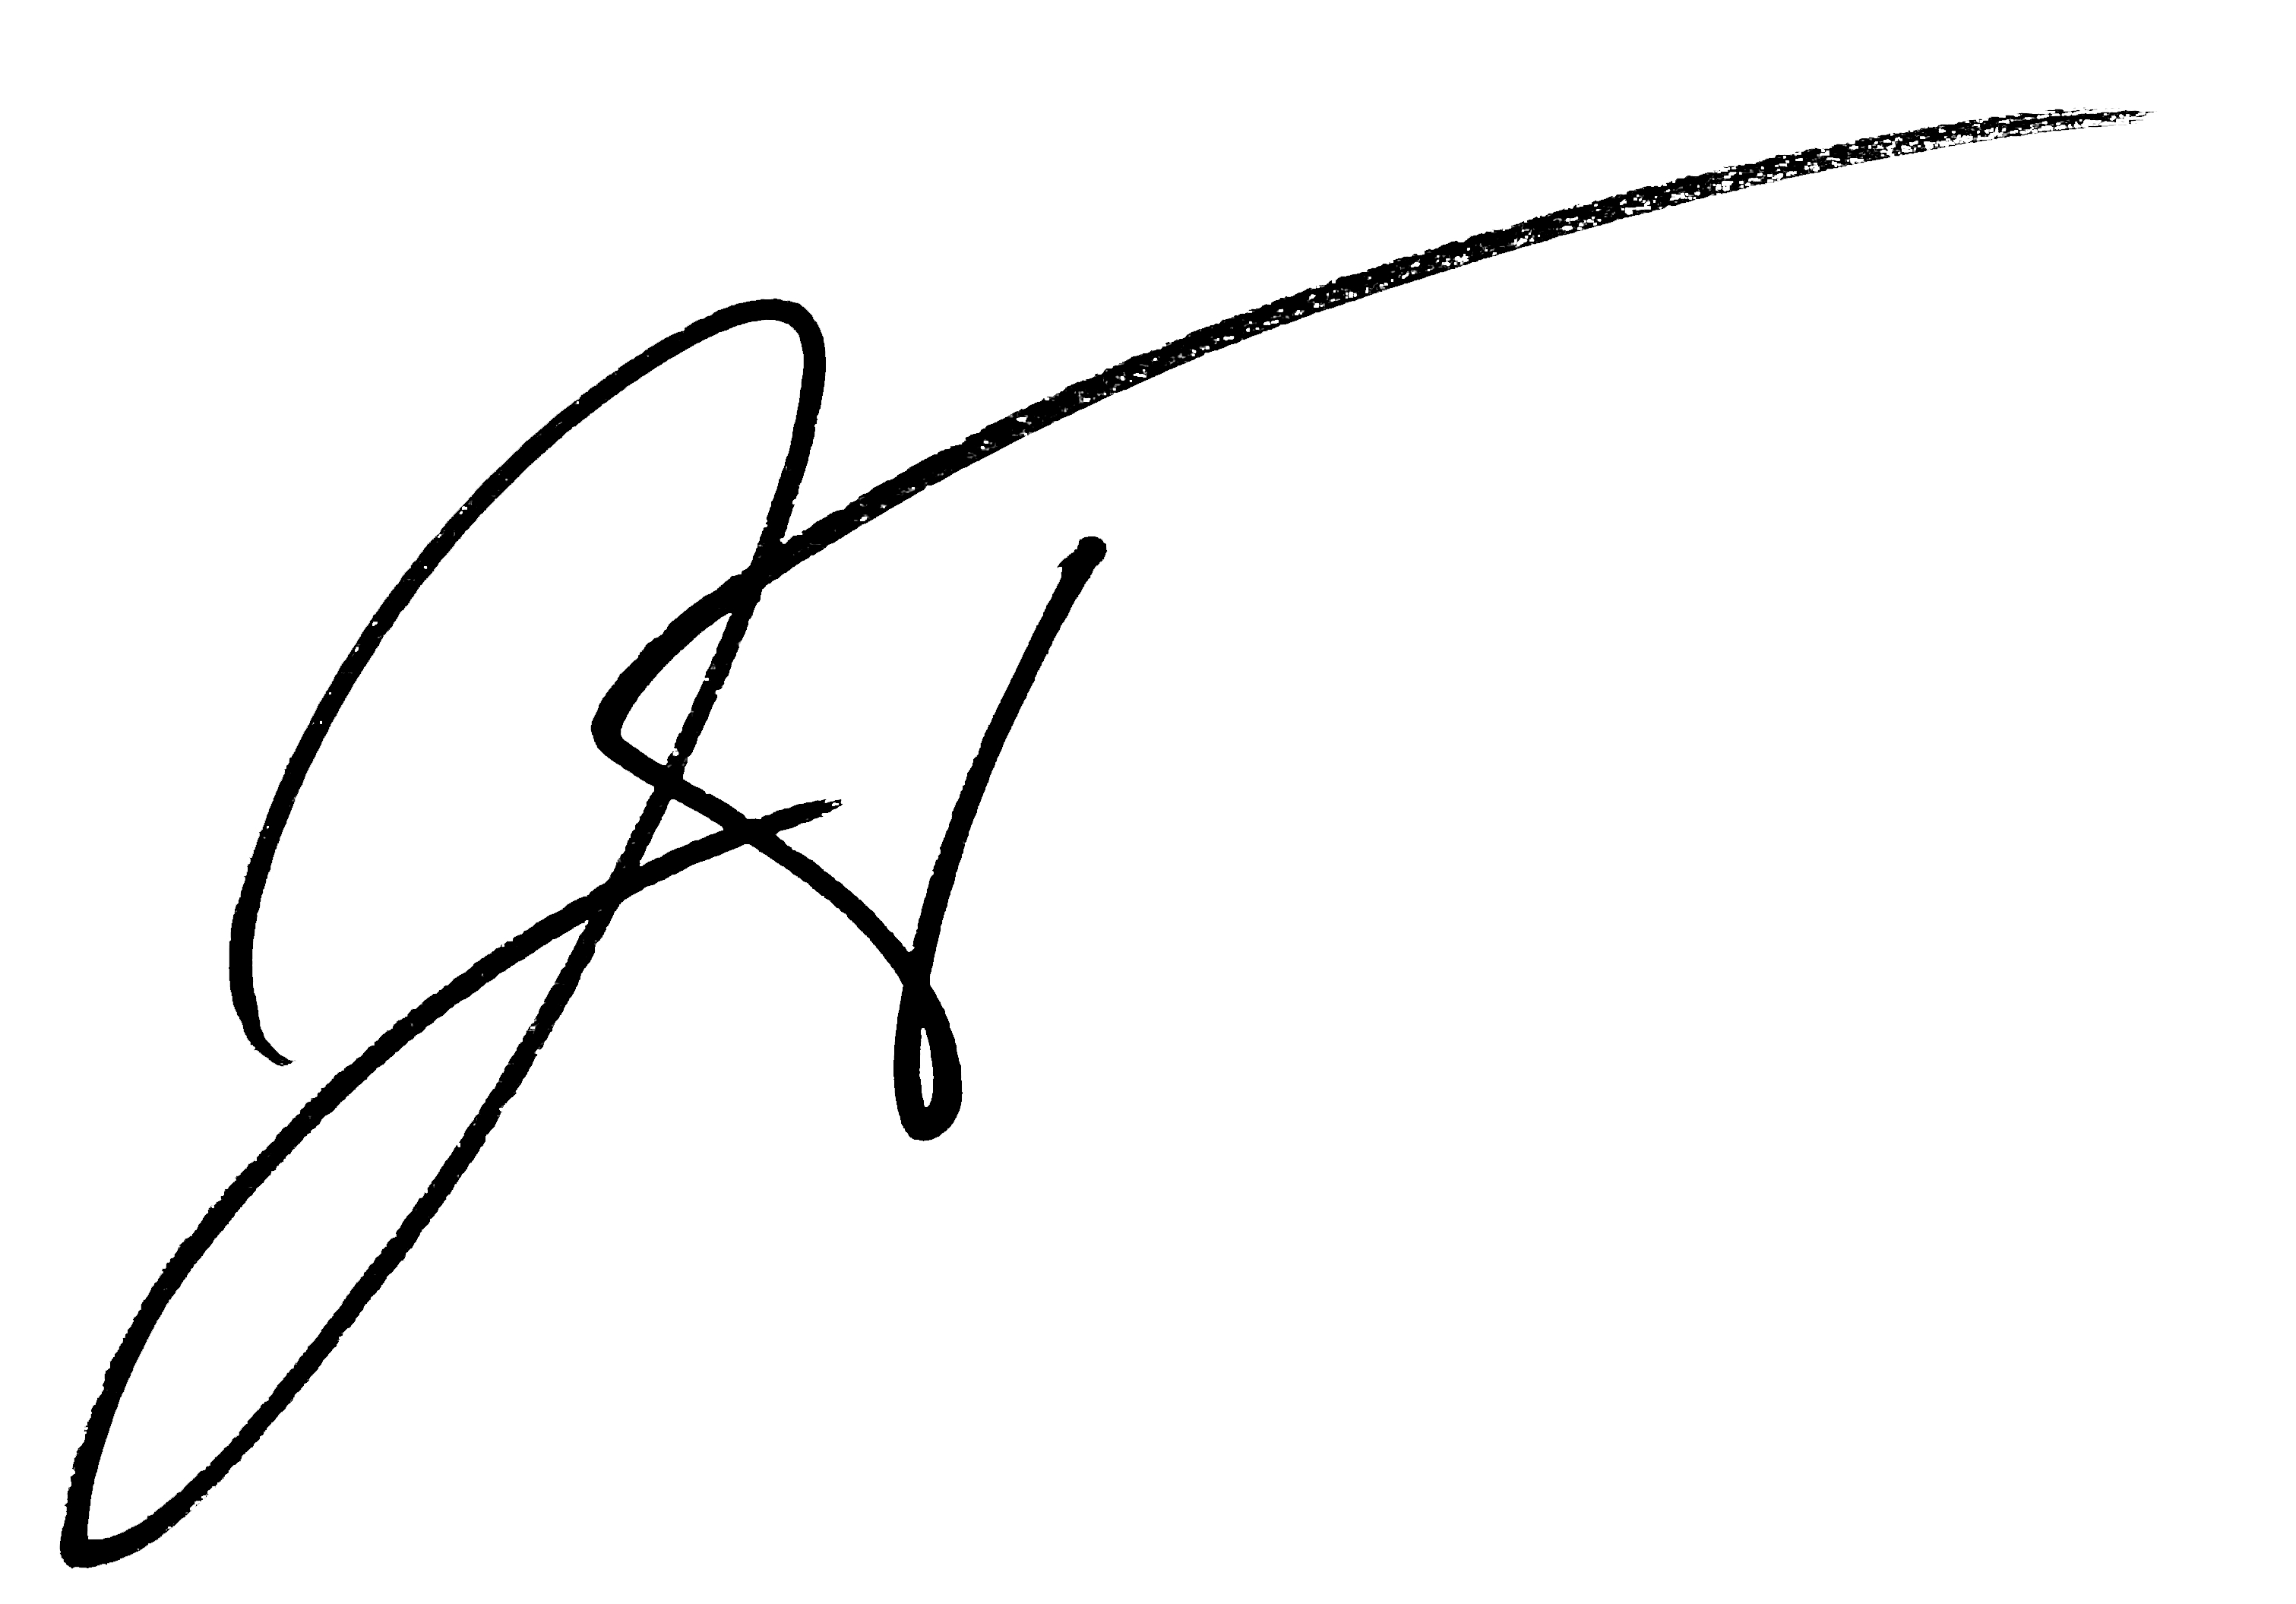 signature1a.jpg